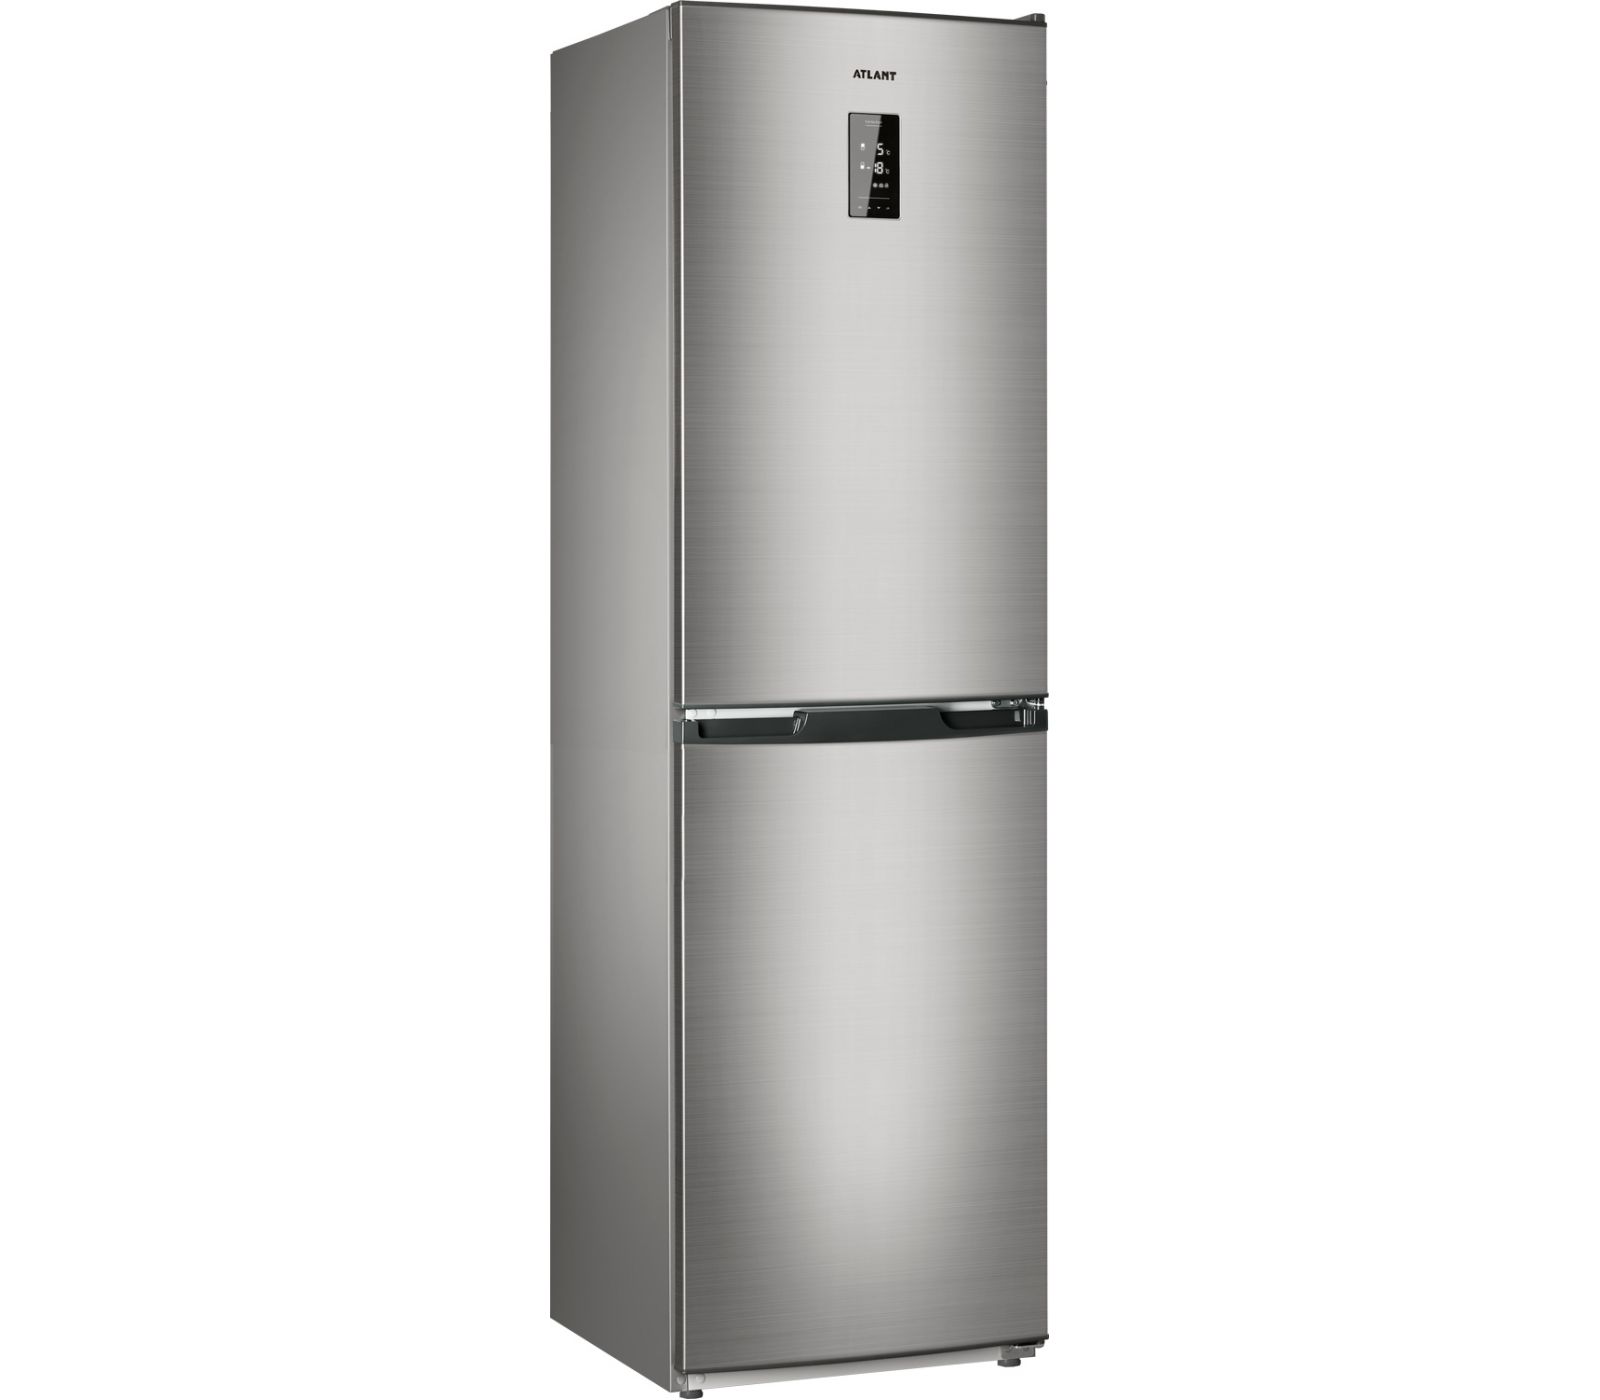 Хорошие недорогие холодильники ноу фрост. ATLANT хм-4524-040 ND. Холодильник Lex RFS 203 NF IX. Холодильник ATLANT 4425-049 ND. Холодильник ATLANT хм 4425-049 ND.